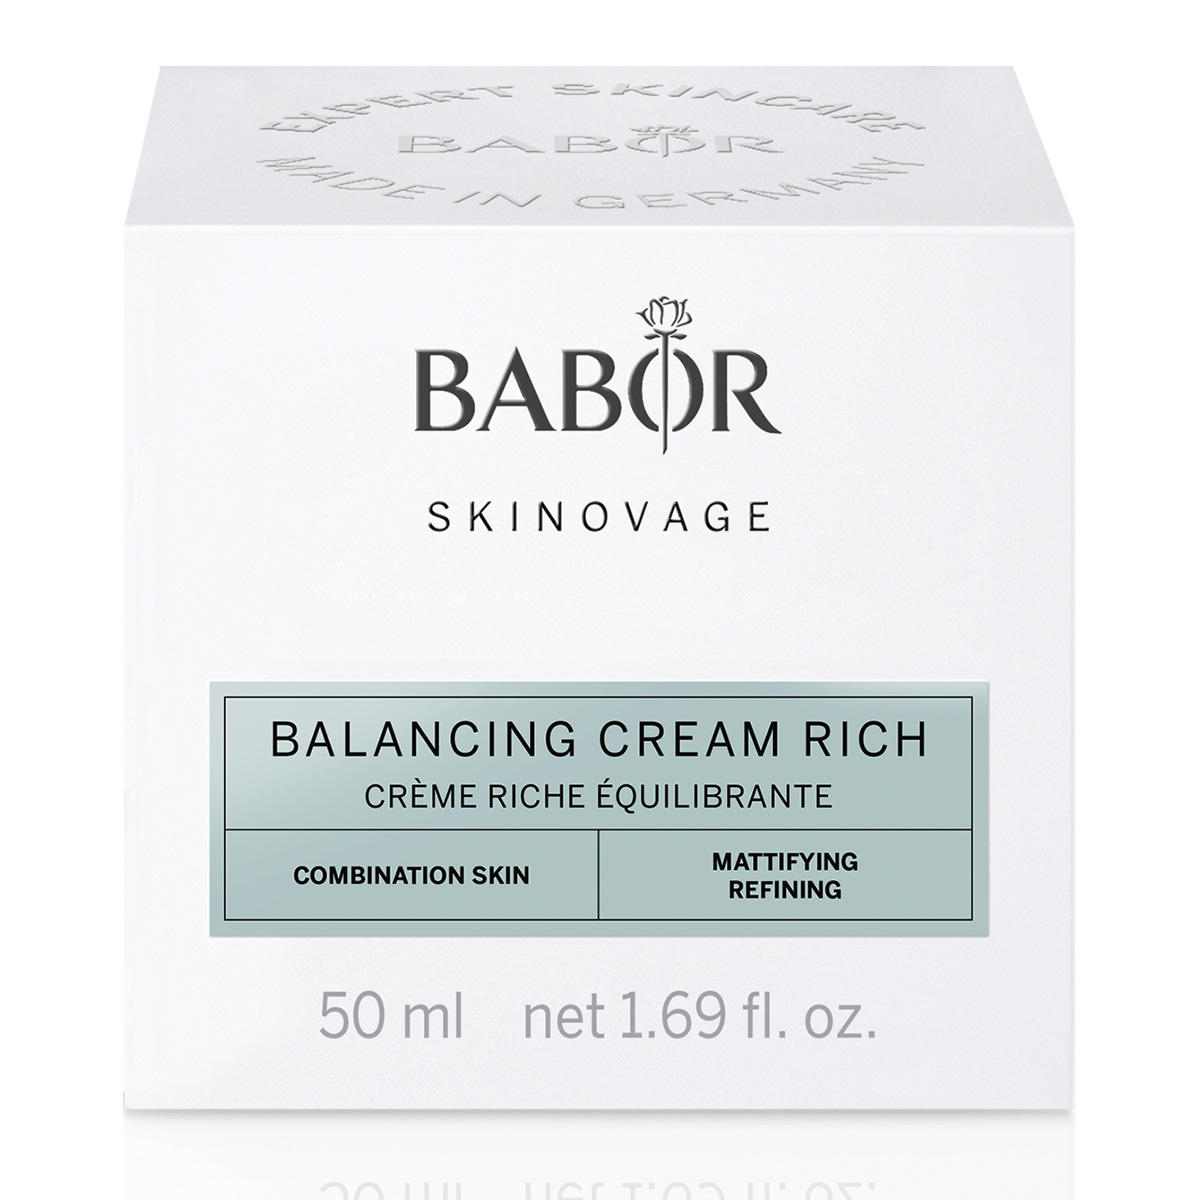 BABOR SKINOVAGE Balancing Cream Rich 50 ml - 2